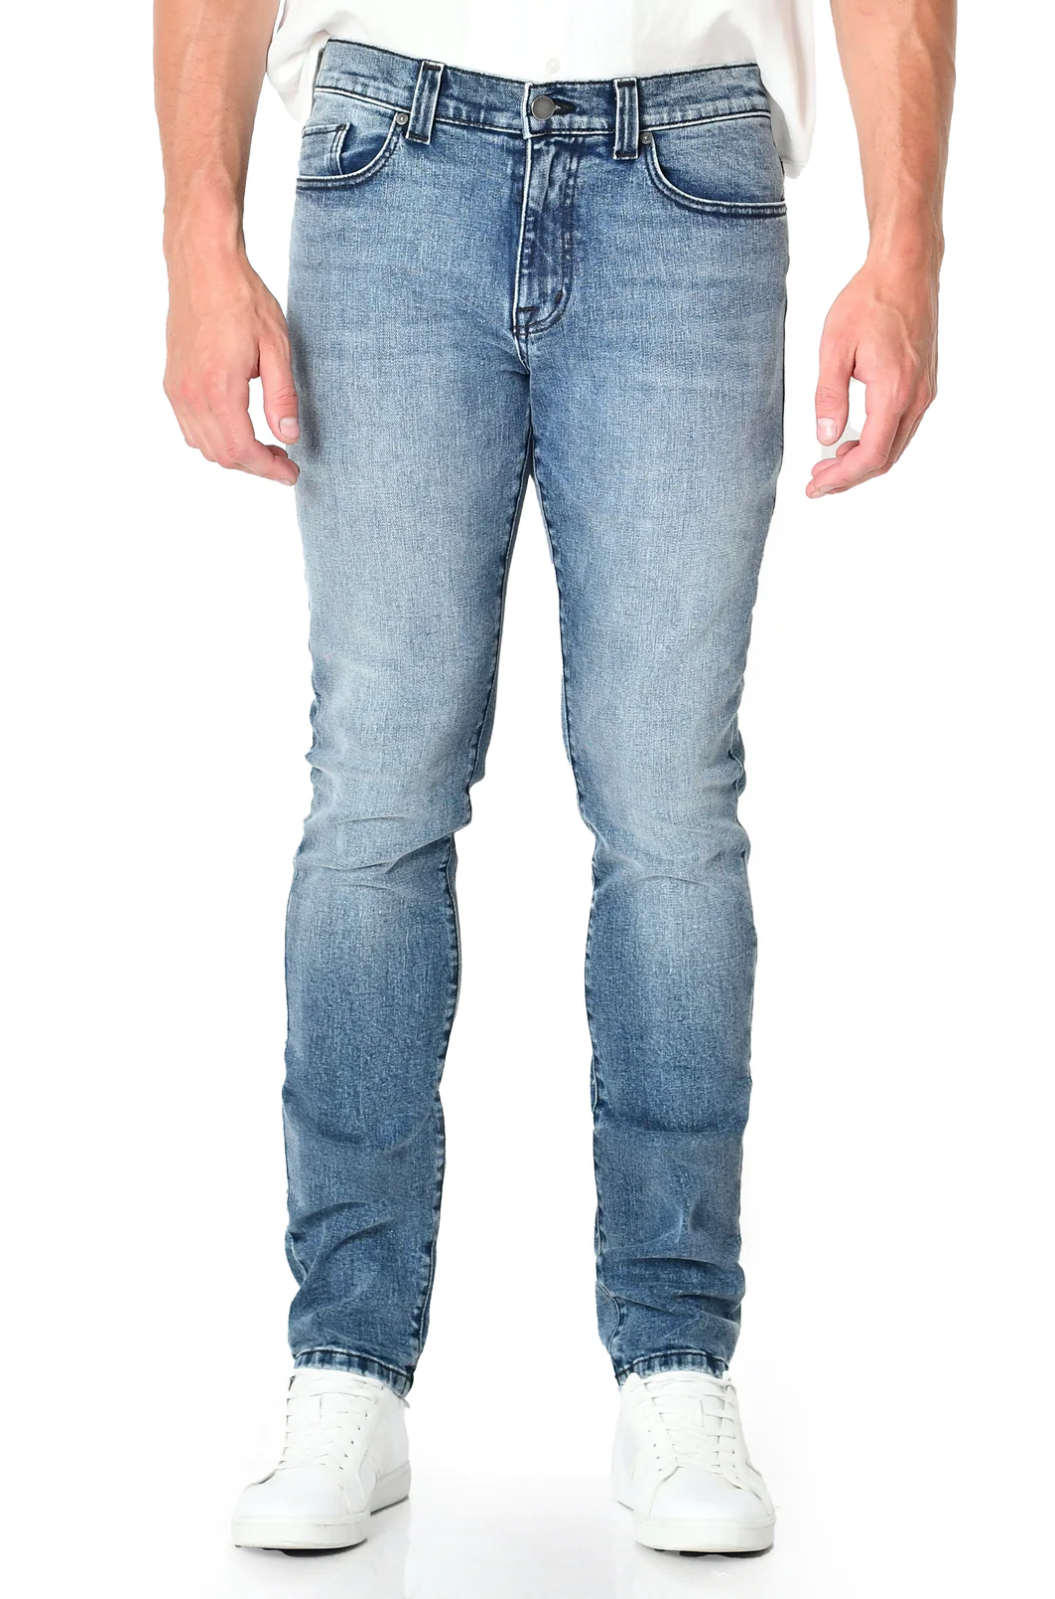 Six Valves Jeans Jeans Denim Dark Blue Rotos Grey Skinny Jeans